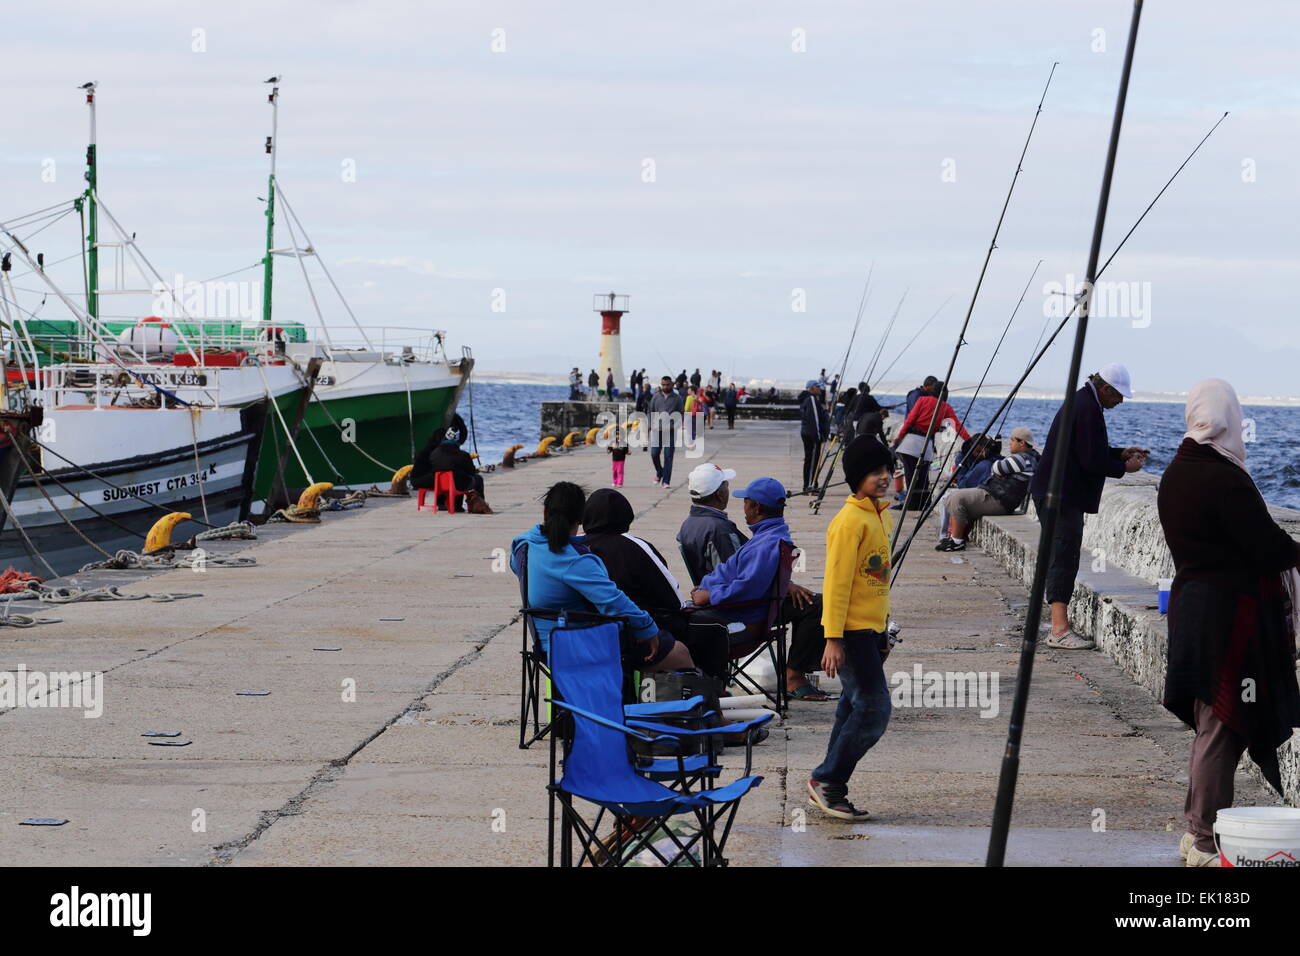 Pier in the Kalk Bay harbour Stock Photo